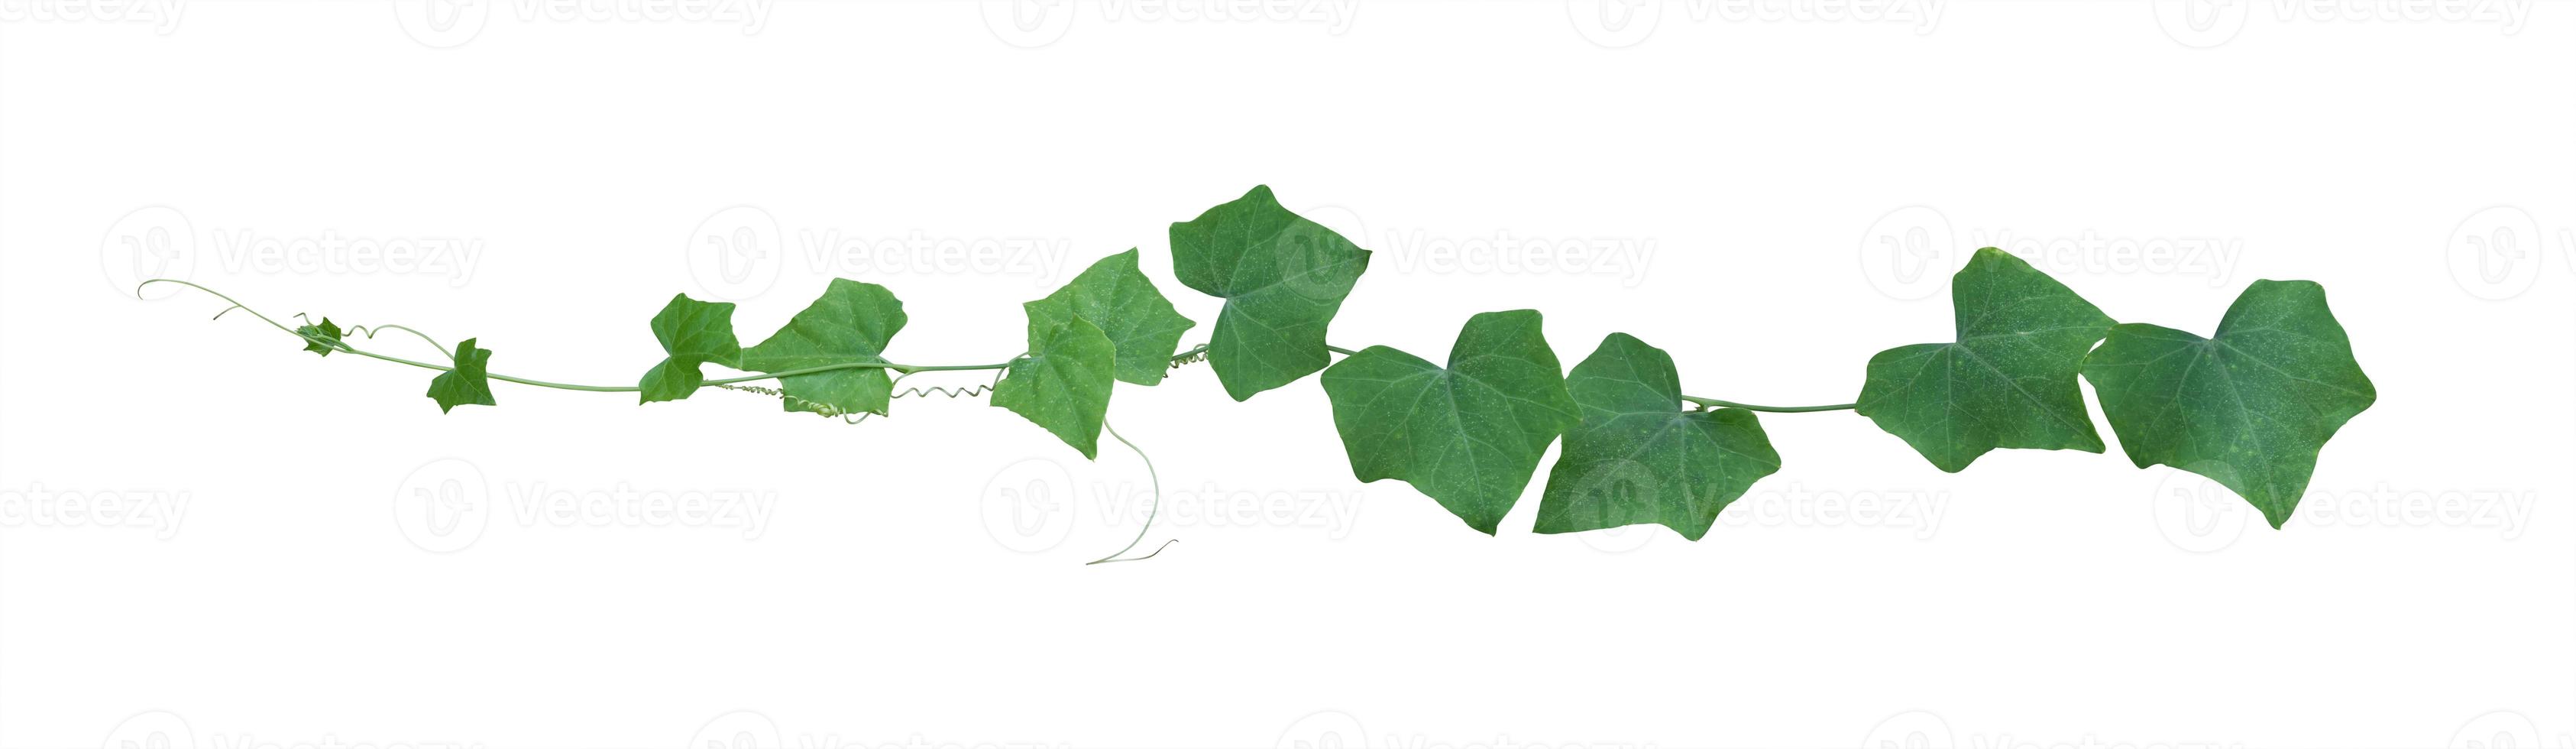 folhas de videira, planta de hera isolada no fundo branco, traçado de recorte foto